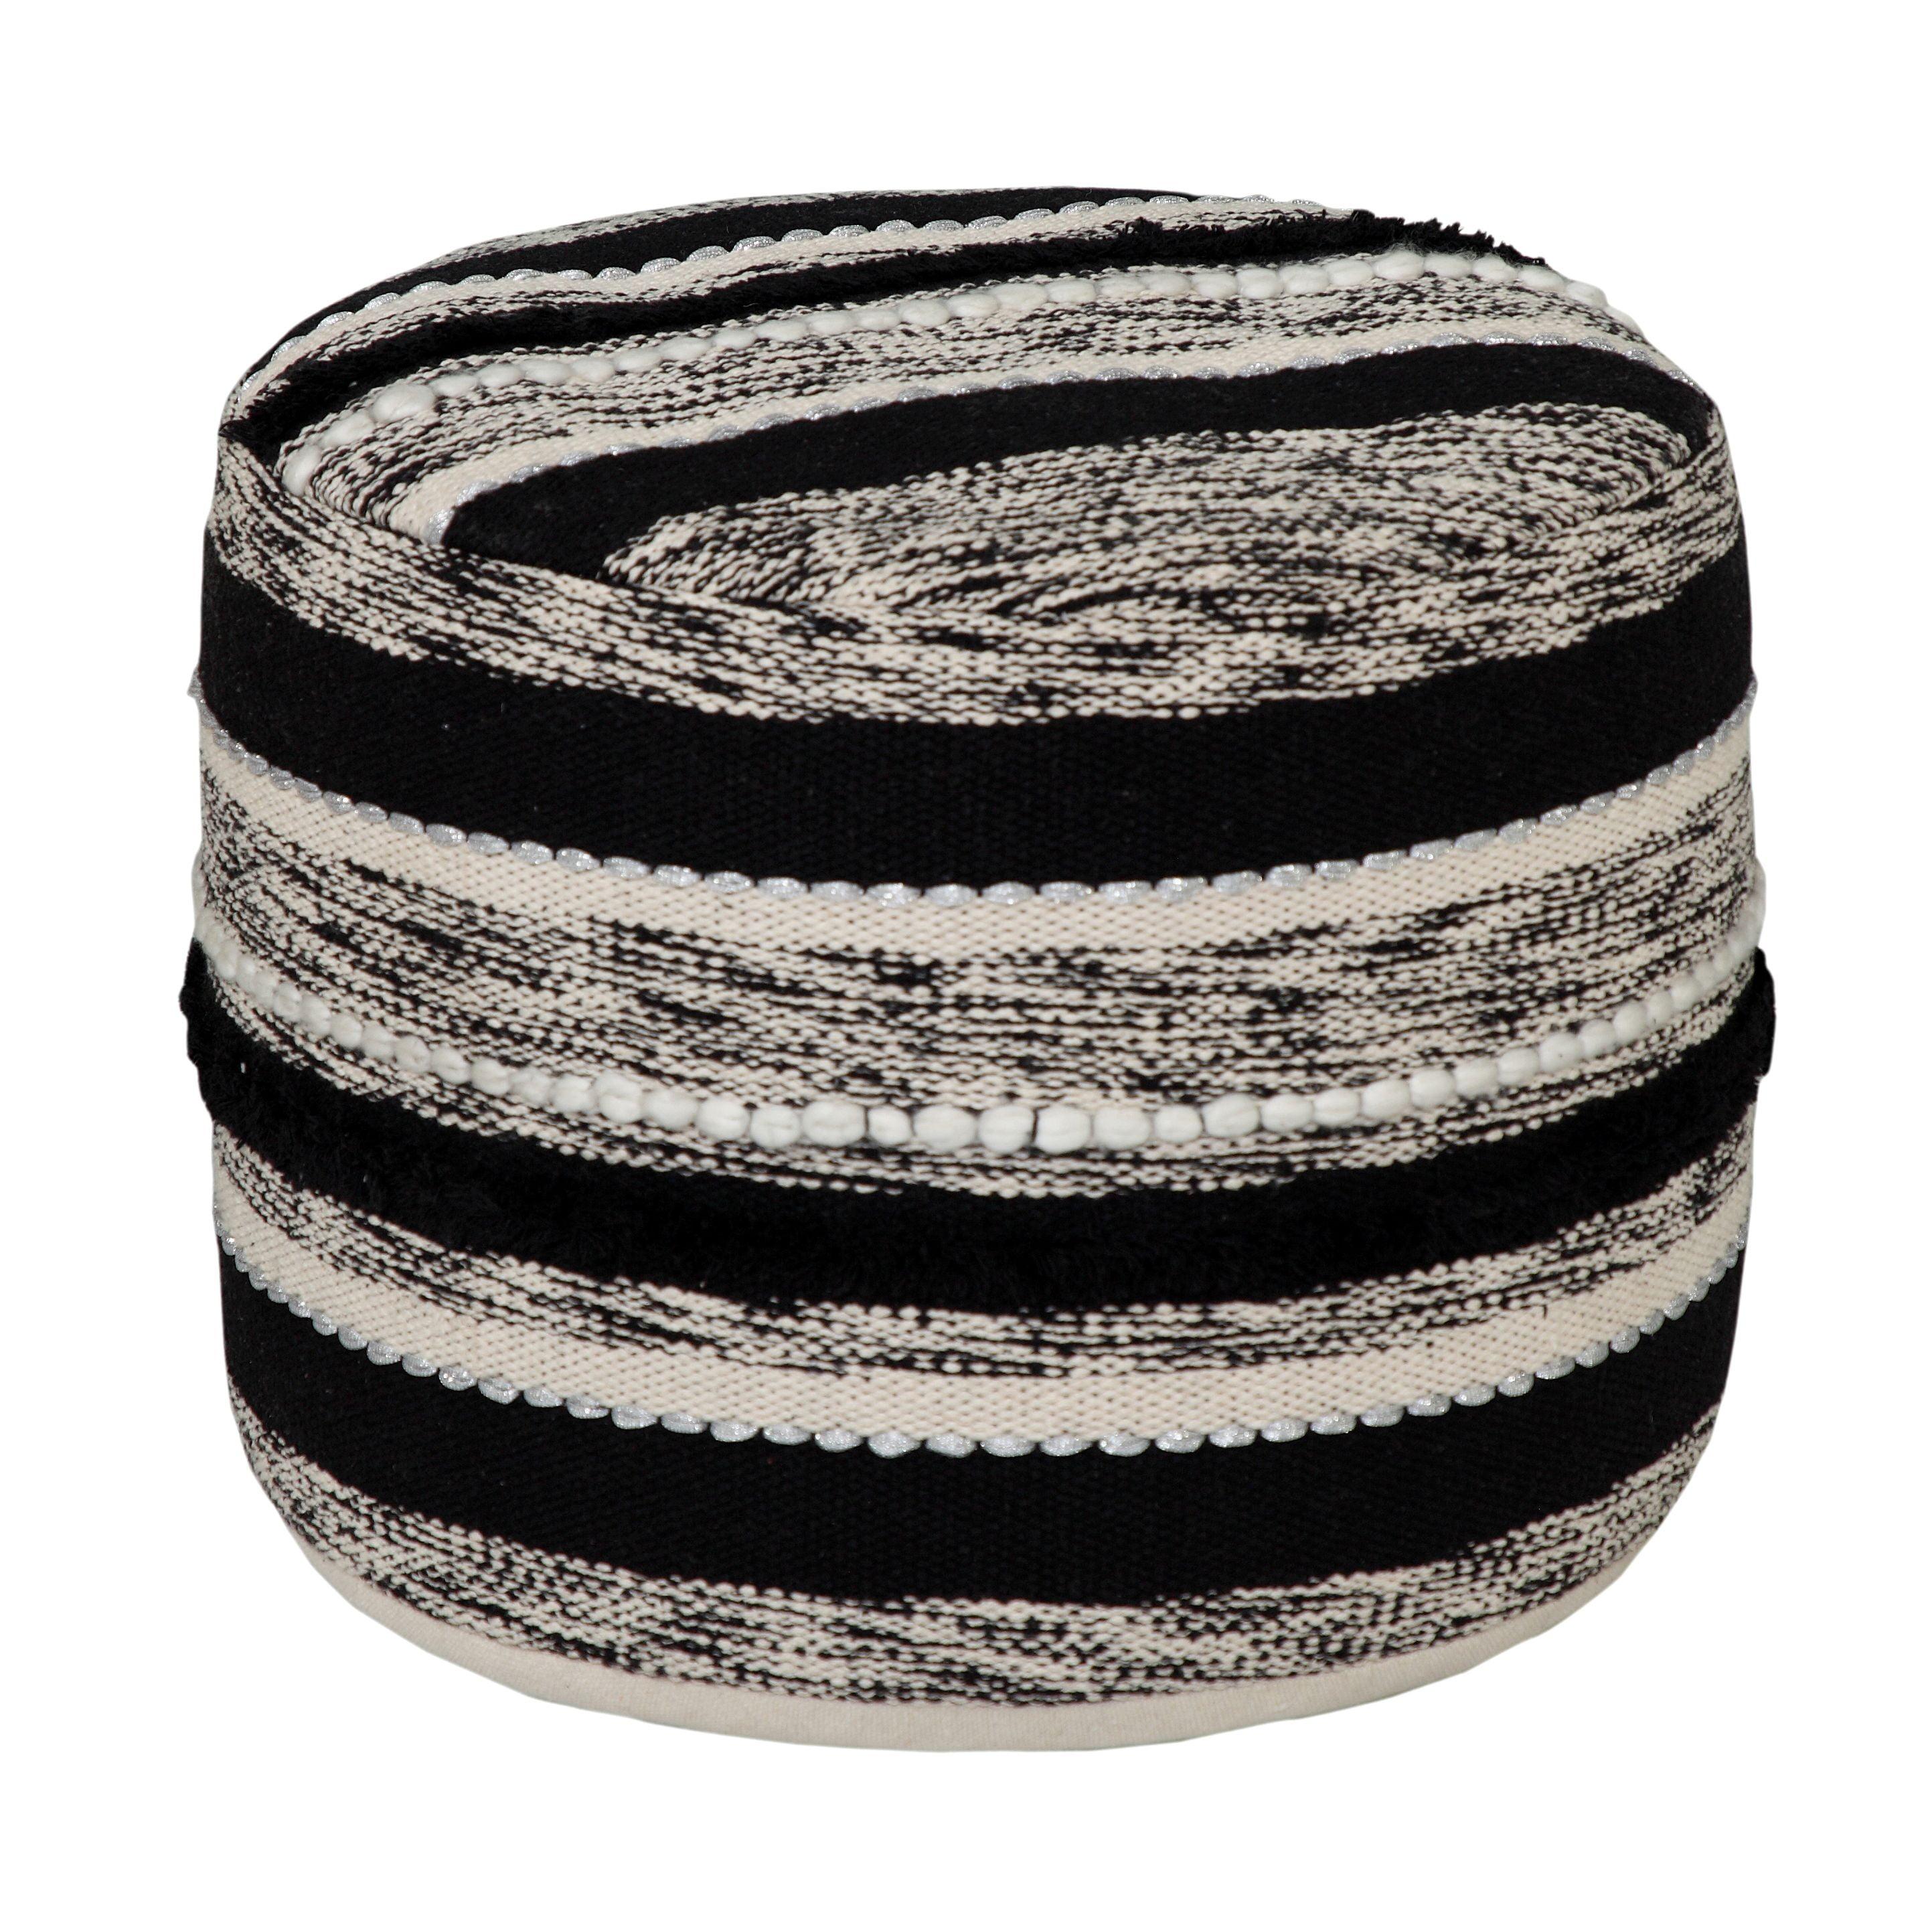 Chic Monochrome Striped Cotton Round Pouf, Black & Natural, 18"x14"